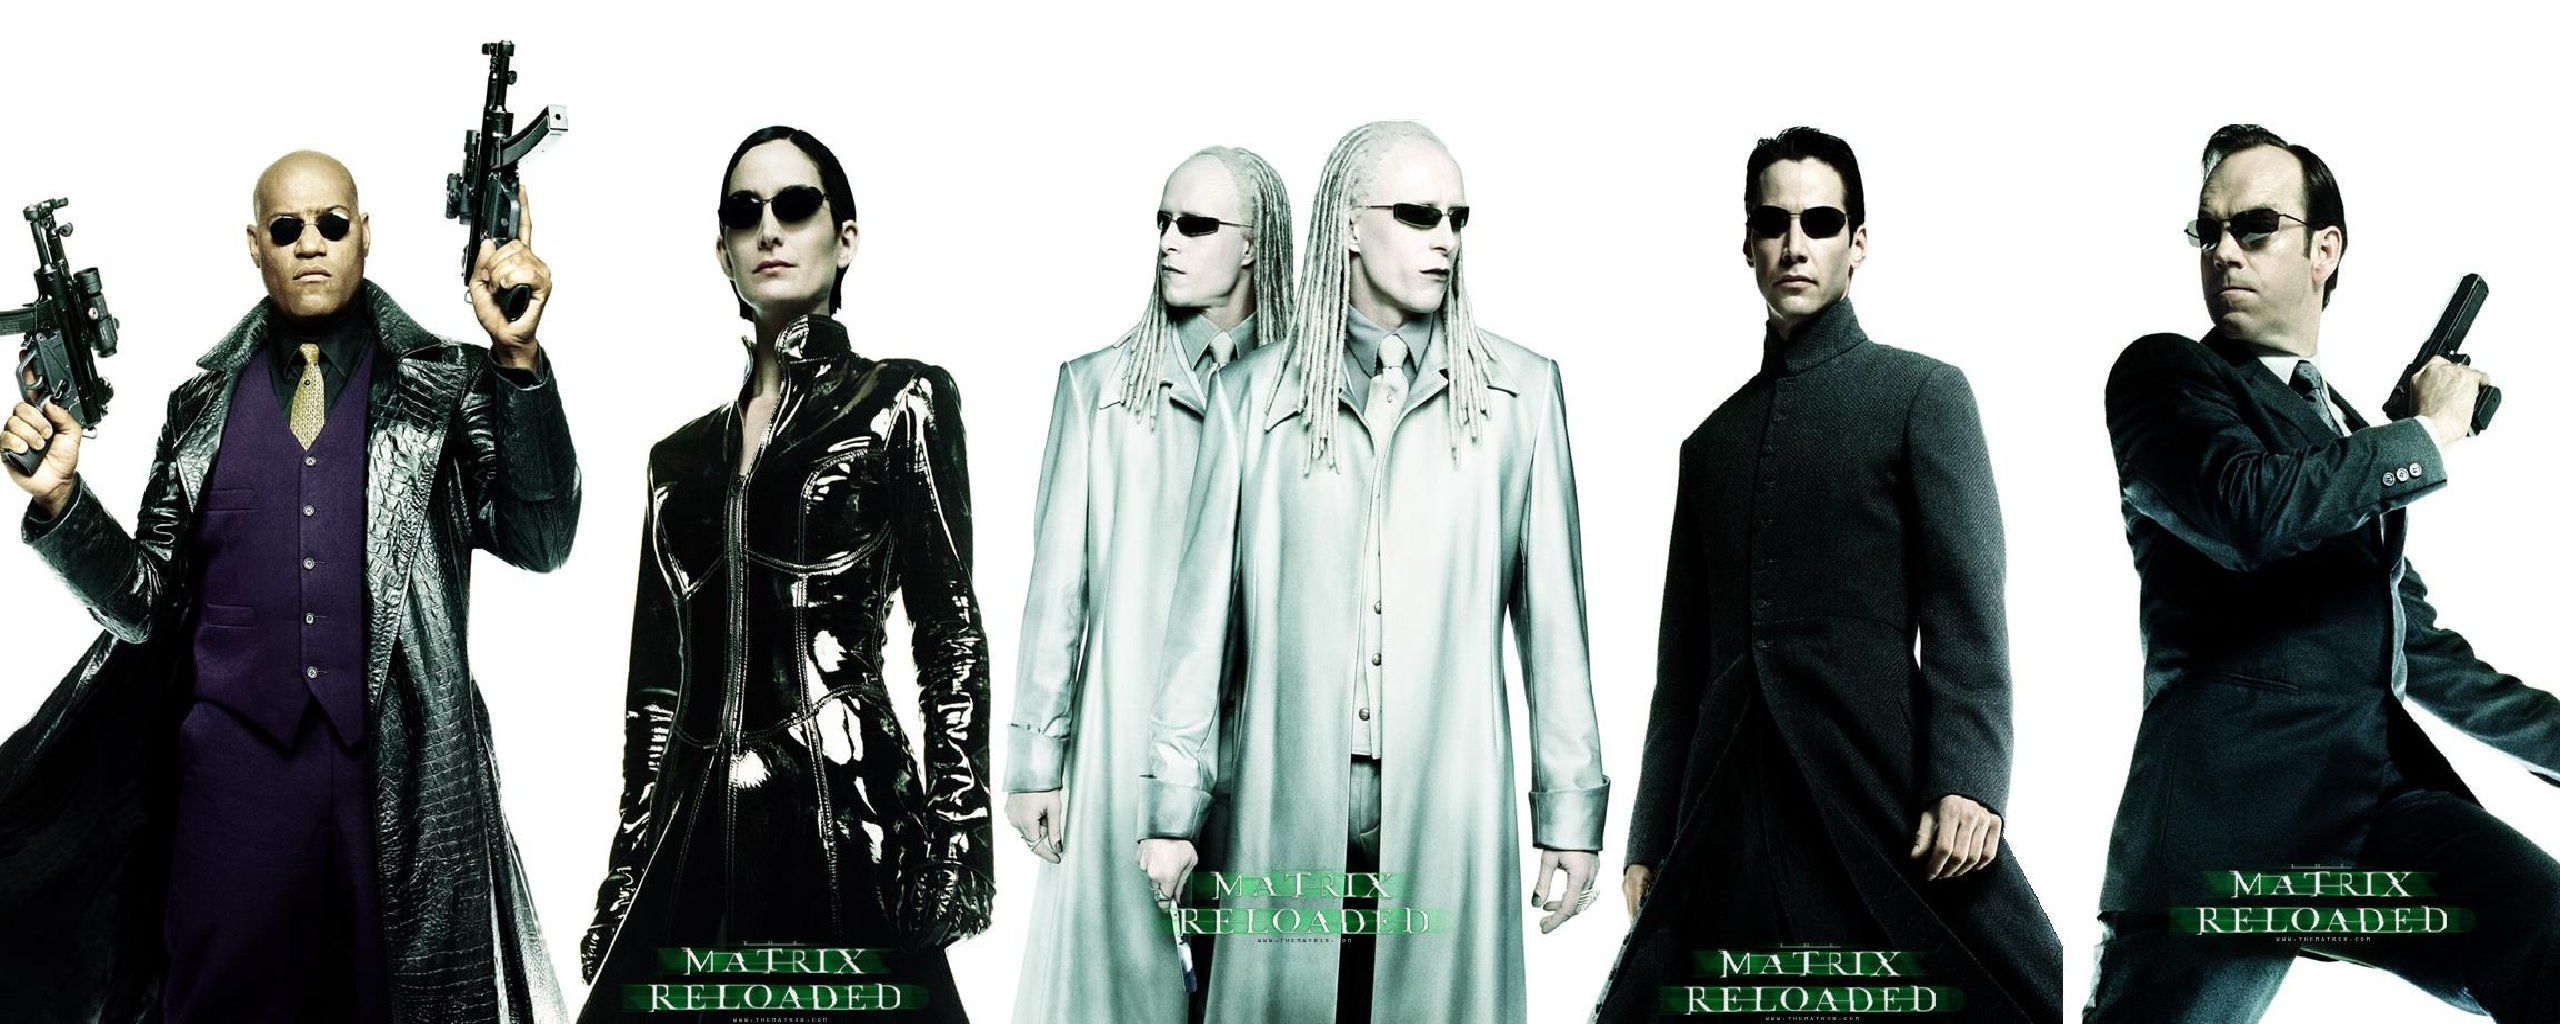 The Matrix Reloaded #4